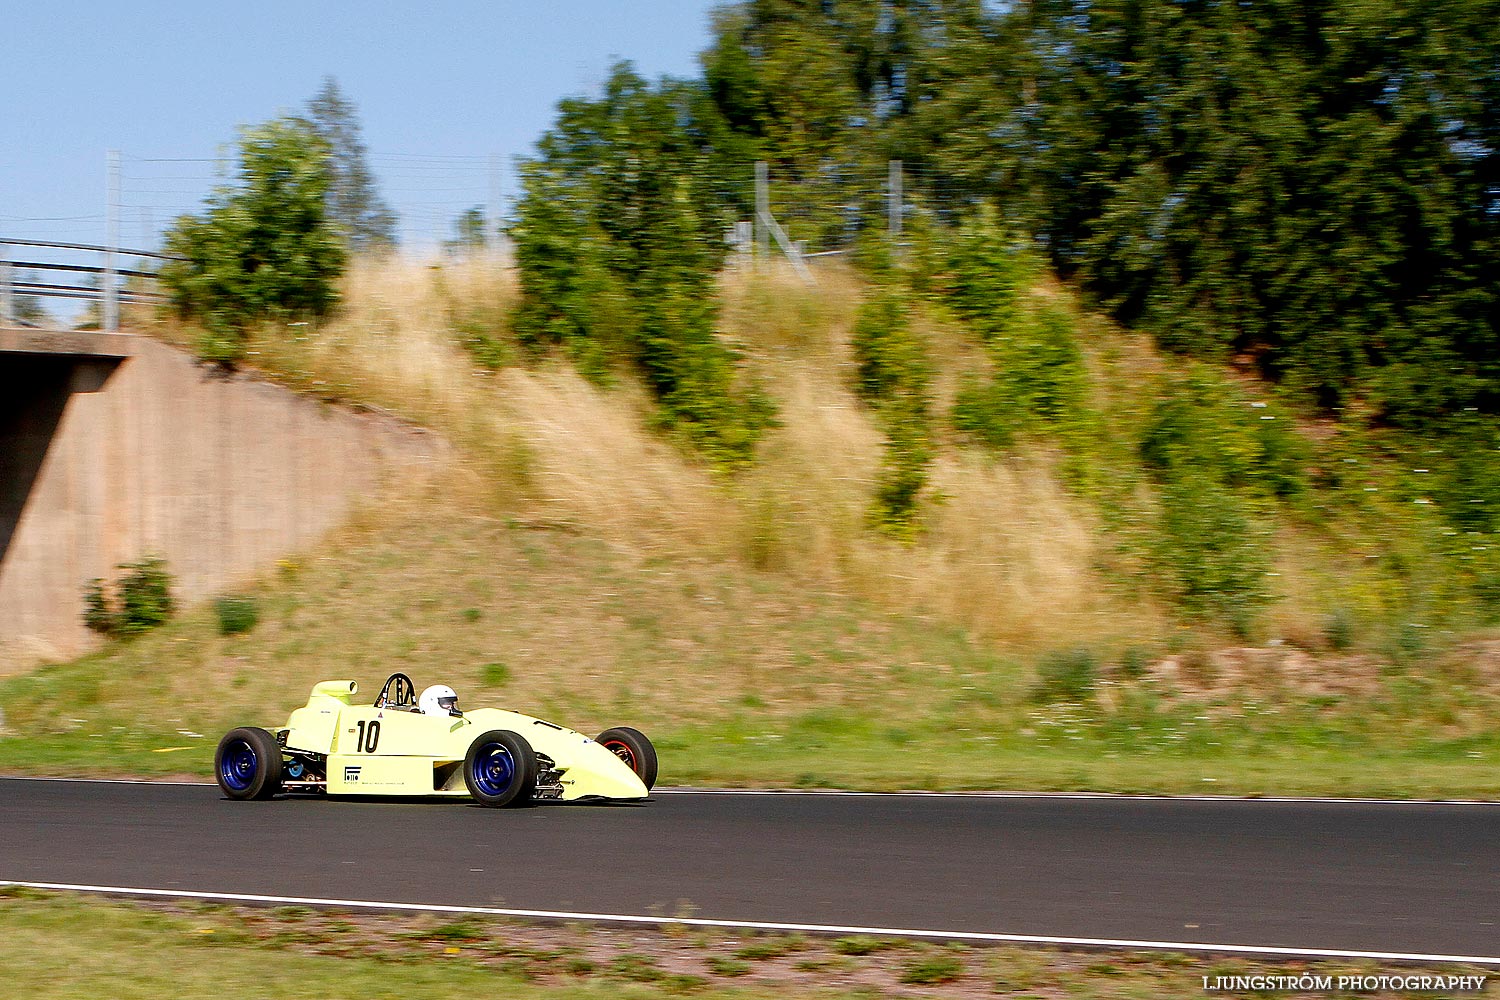 SSK Raceweek,mix,Kinnekulle Ring,Götene,Sverige,Motorsport,,2014,90294